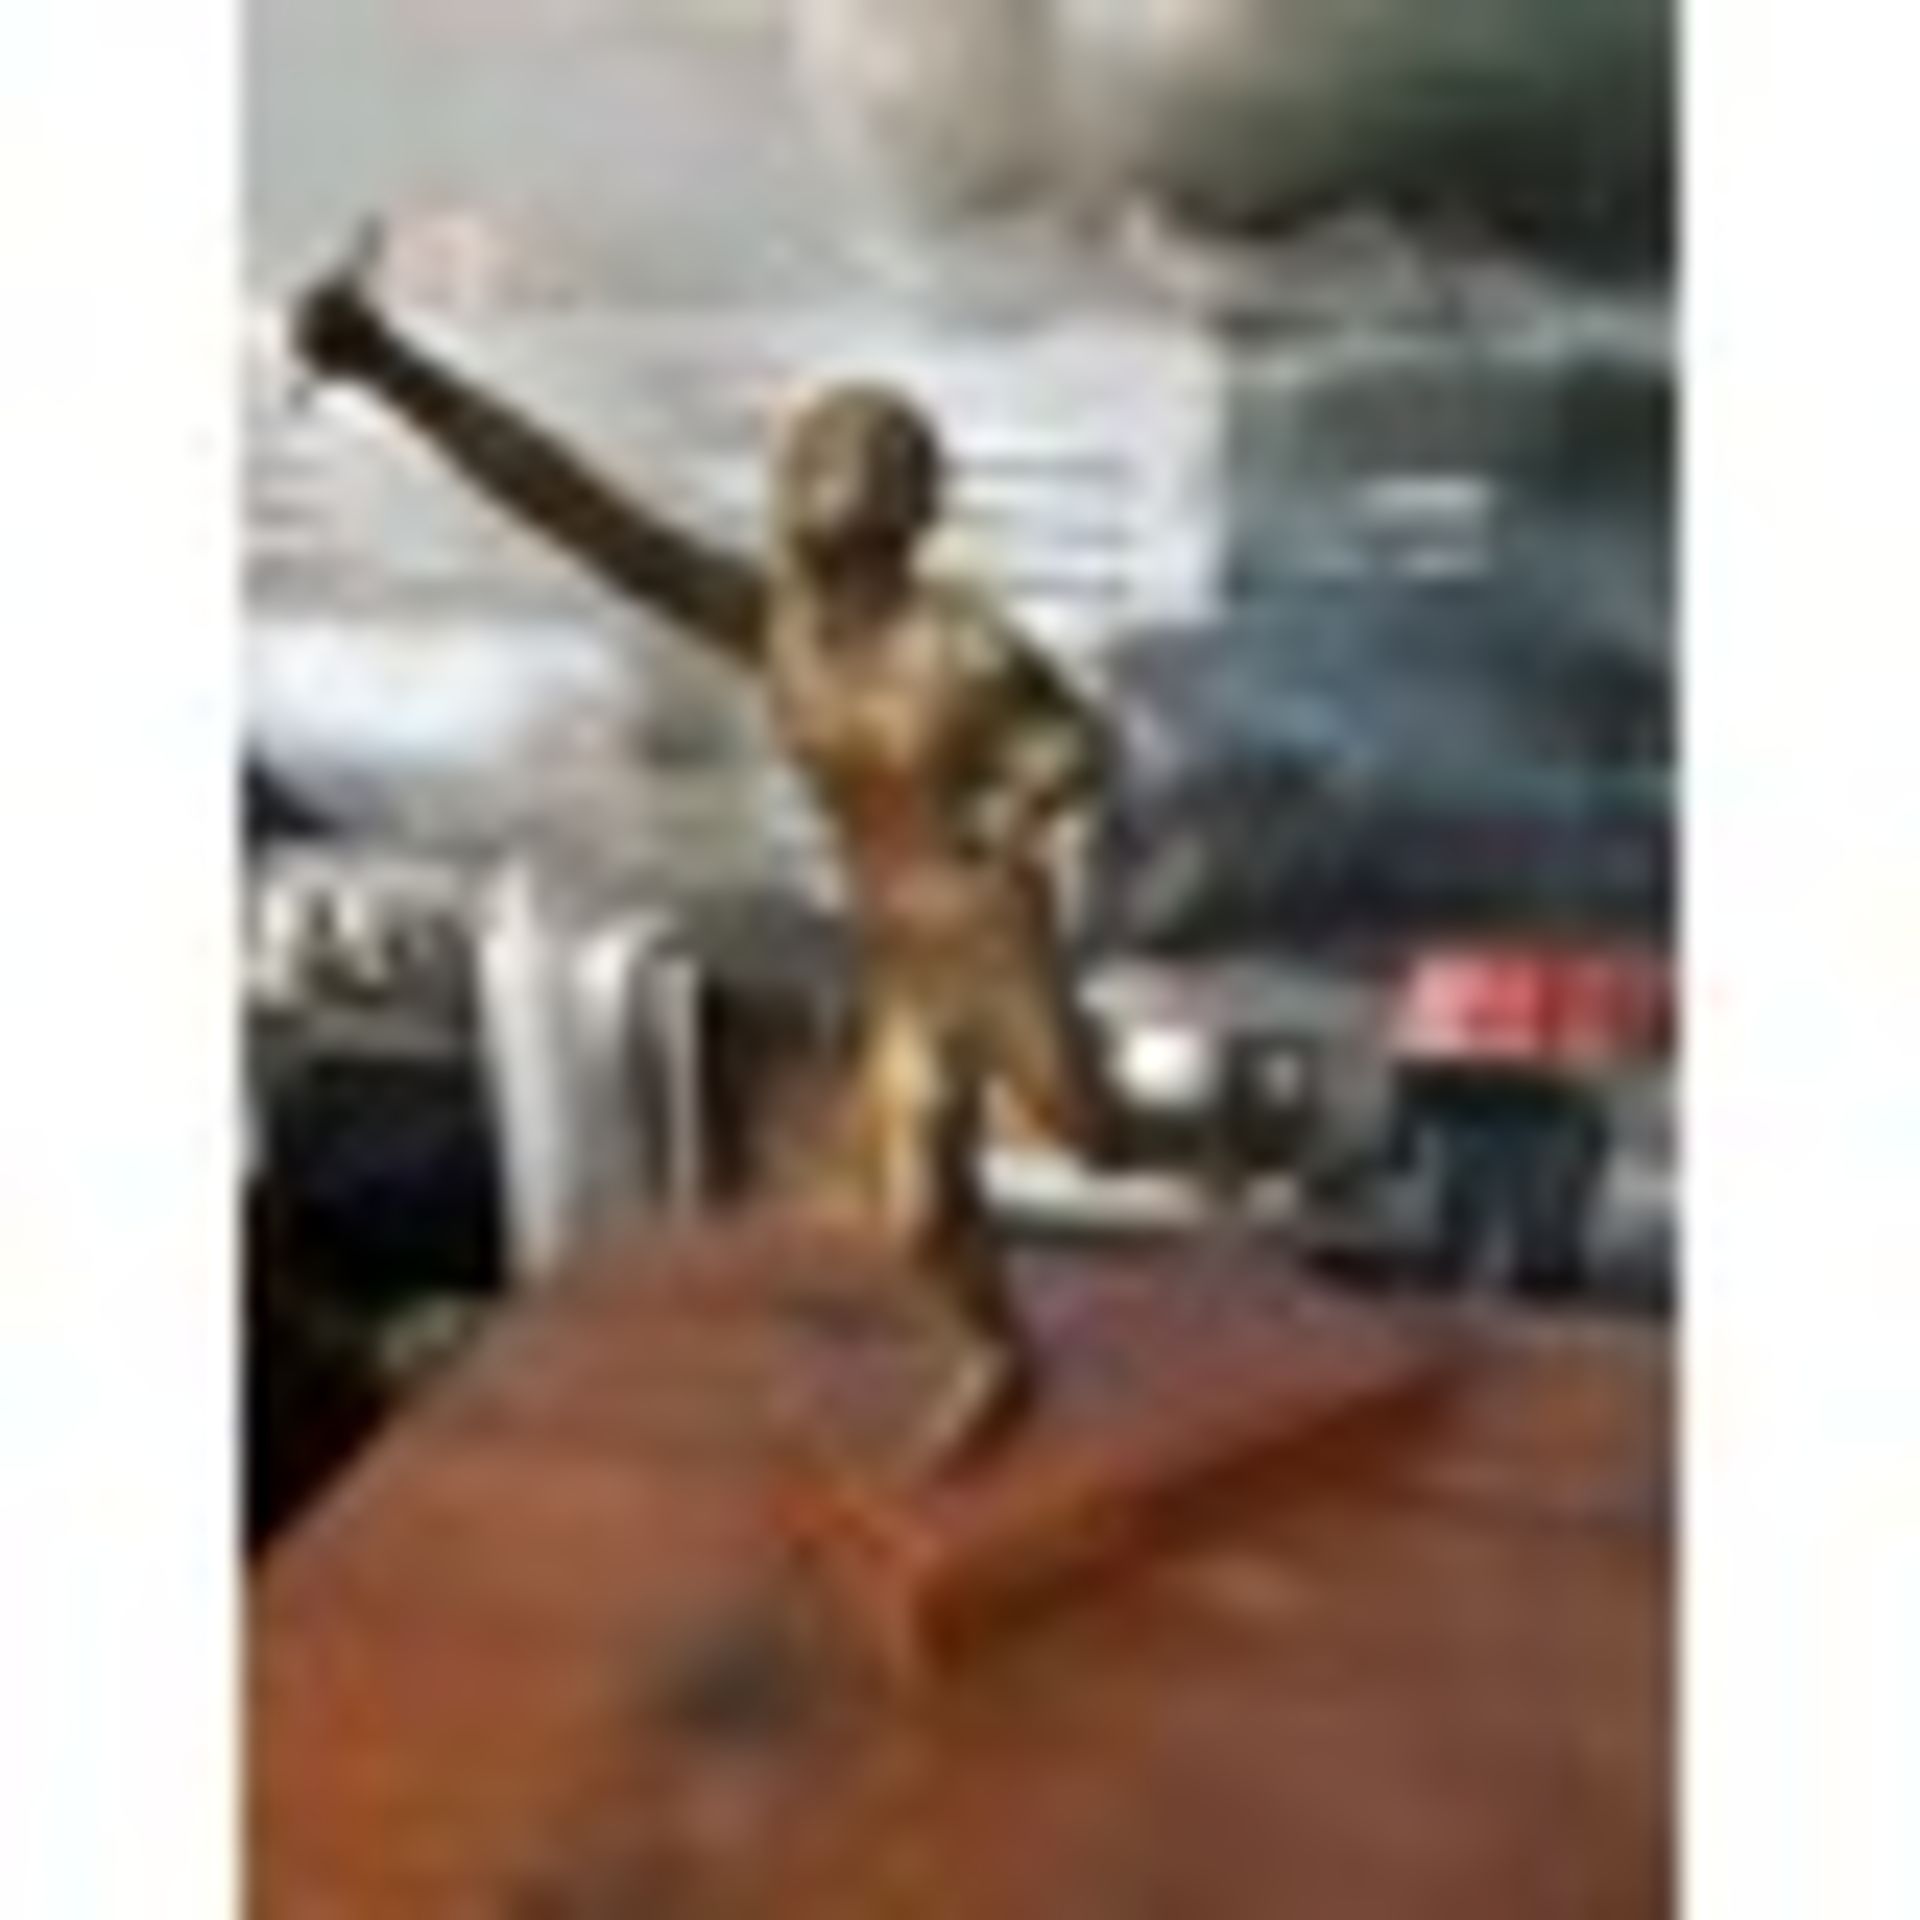 Bronzed Resin Sport Man RS-08 Objets d'Art Decorative Accessories Carton 26 x 20 x 35cm MSRP £157 - Image 2 of 2